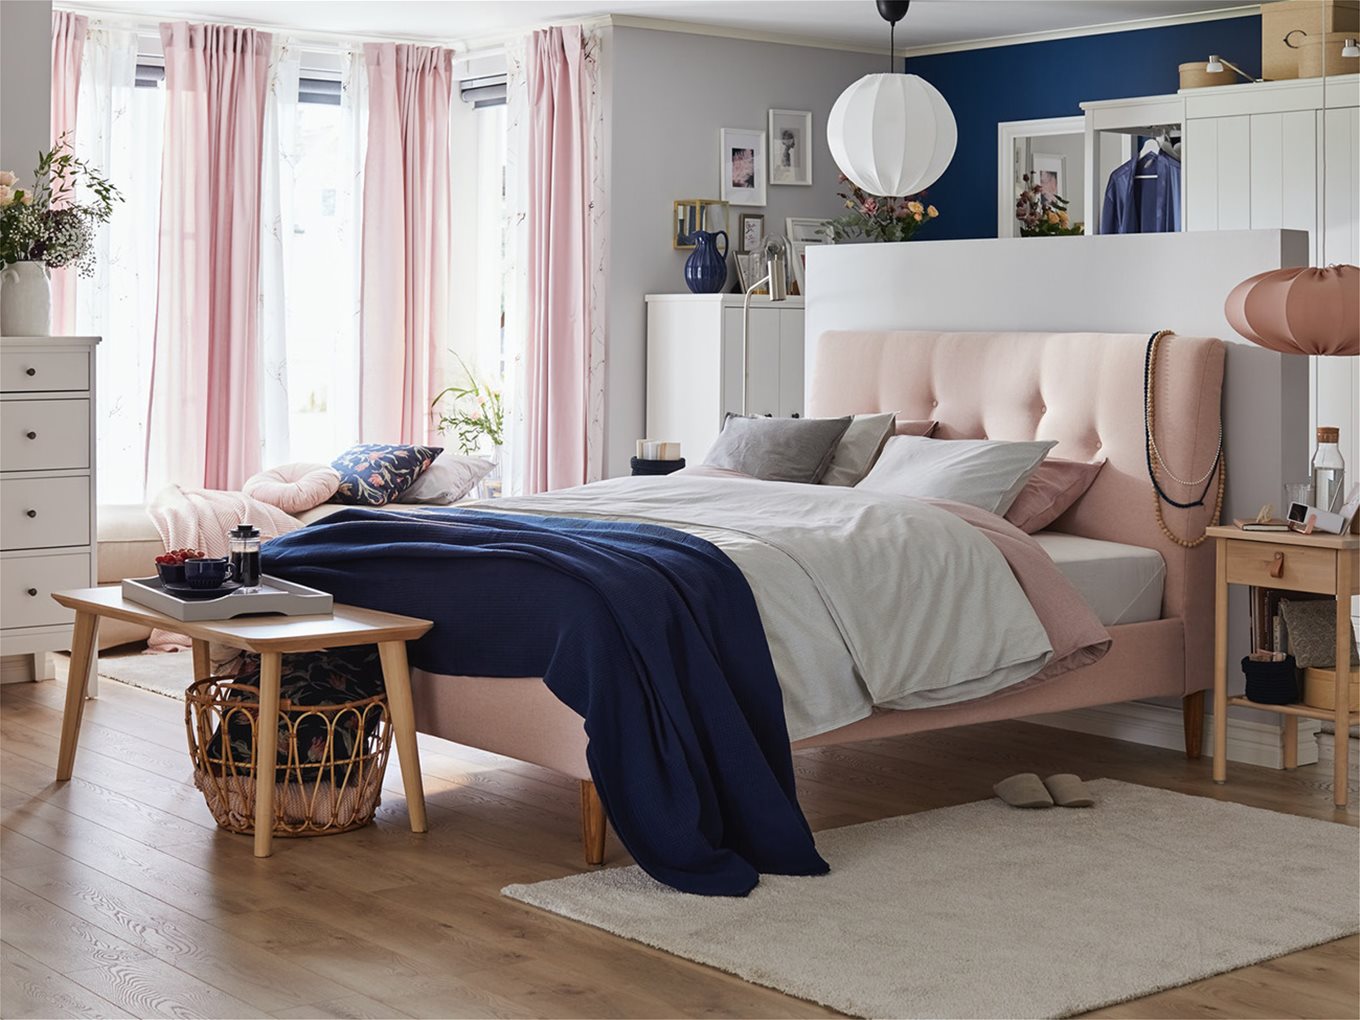 ikea bedroom furniture inspiration